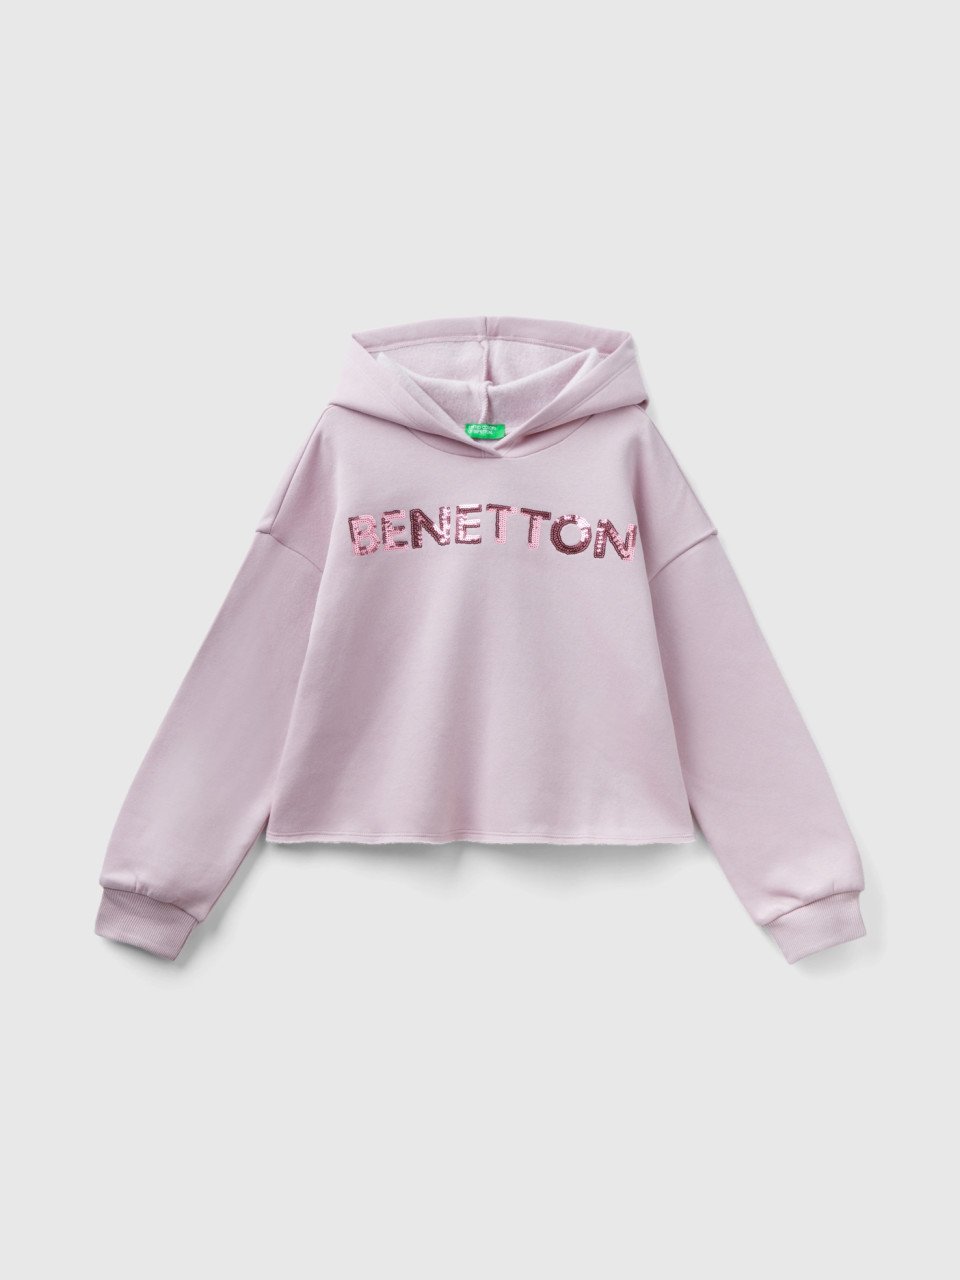 Benetton, Kapuzen-sweatshirt Mit Pailletten, Pink, female